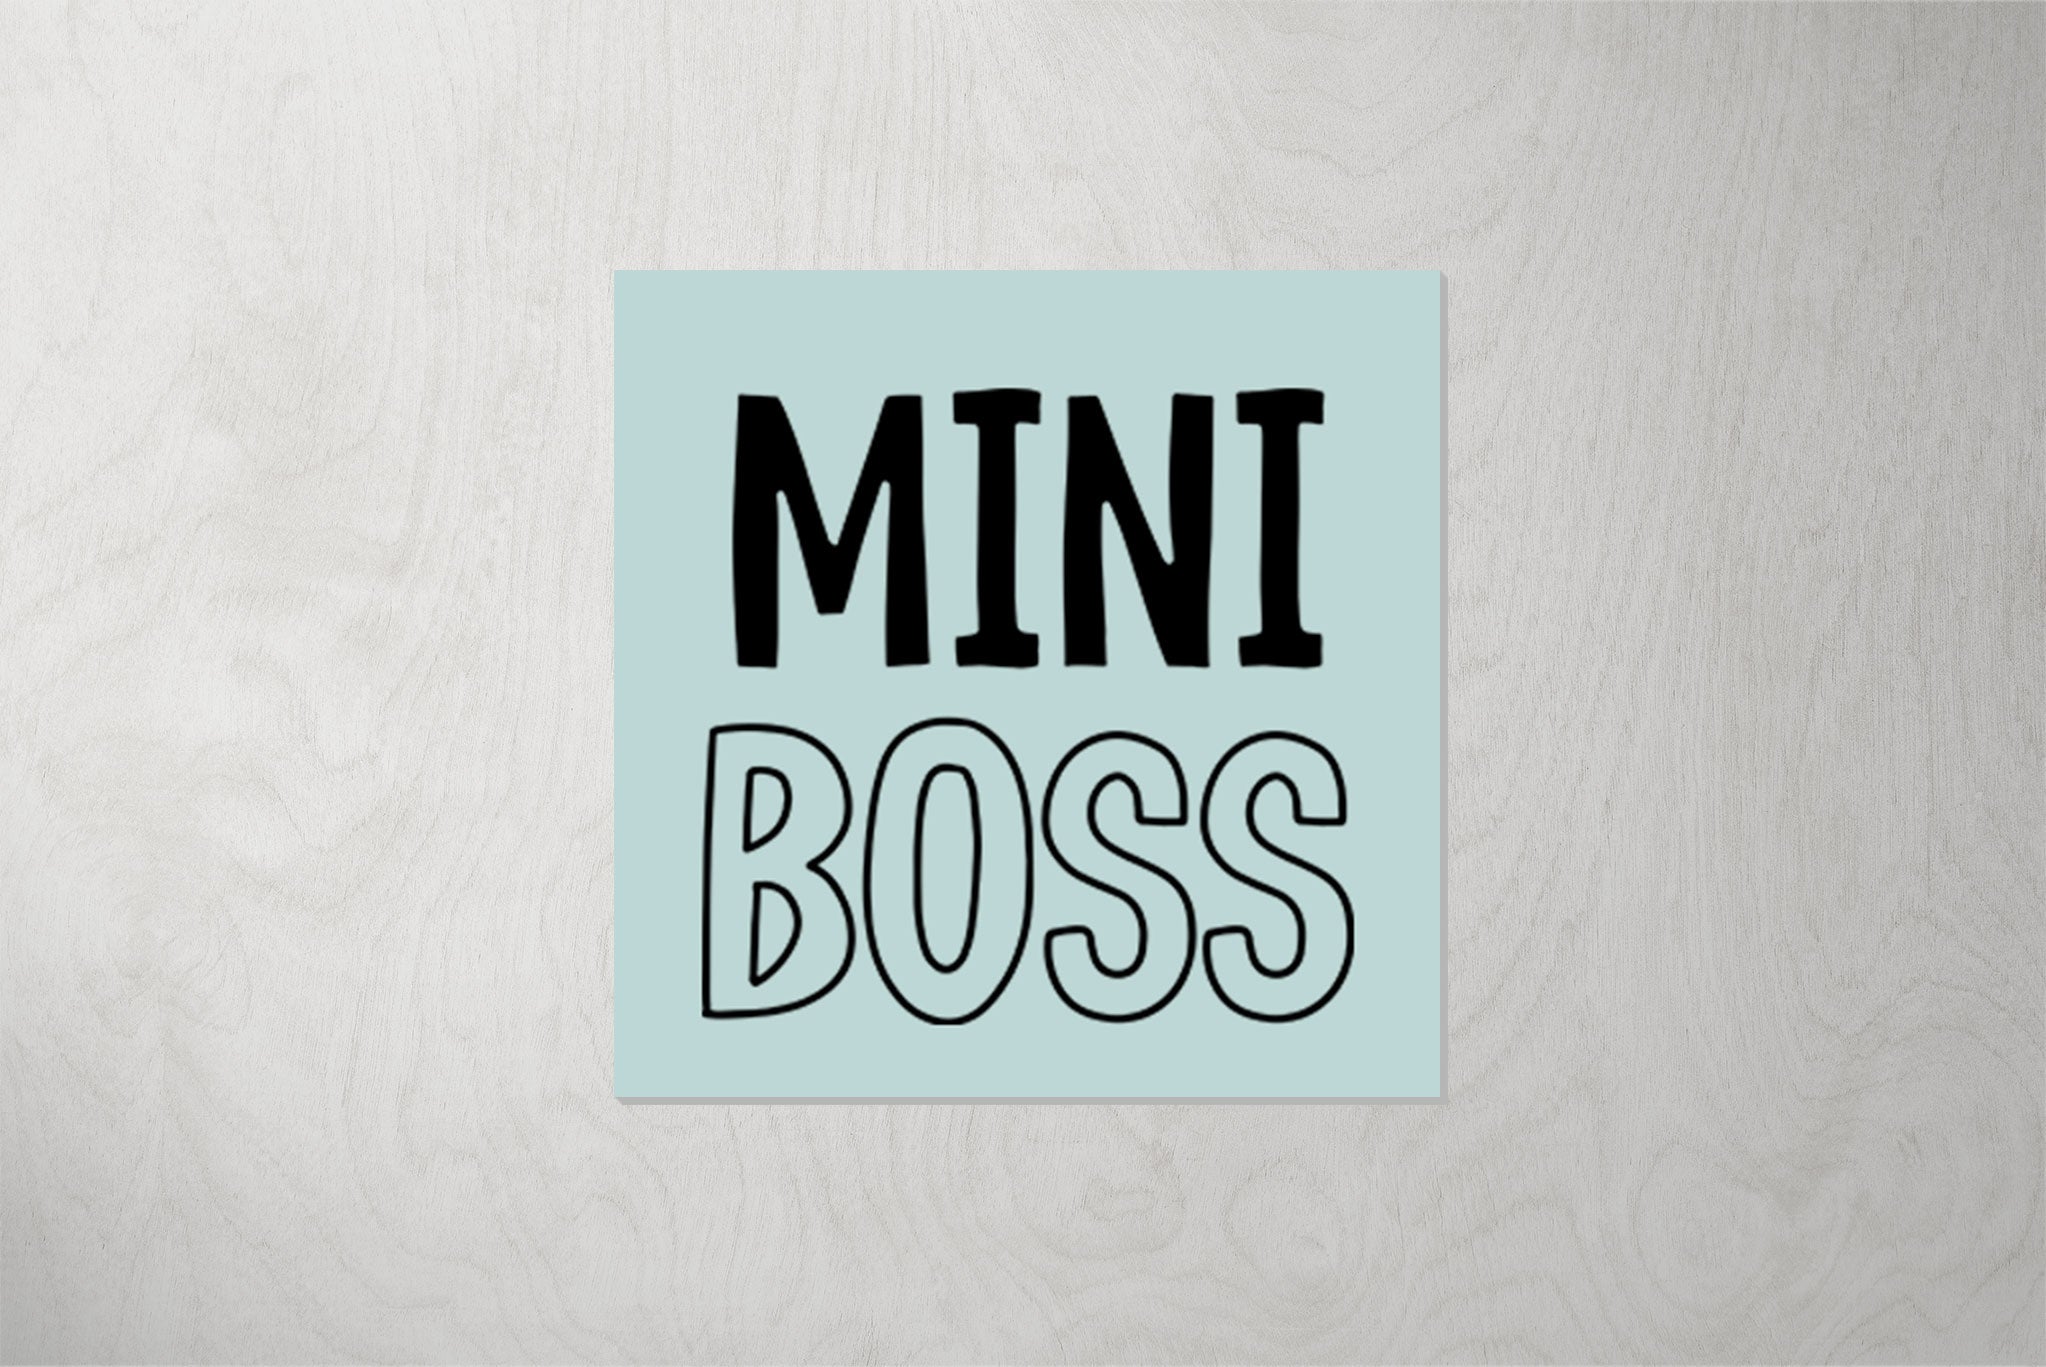 Kunstleder Patch "Mini Boss" mint 3,5 x 3,5 cm